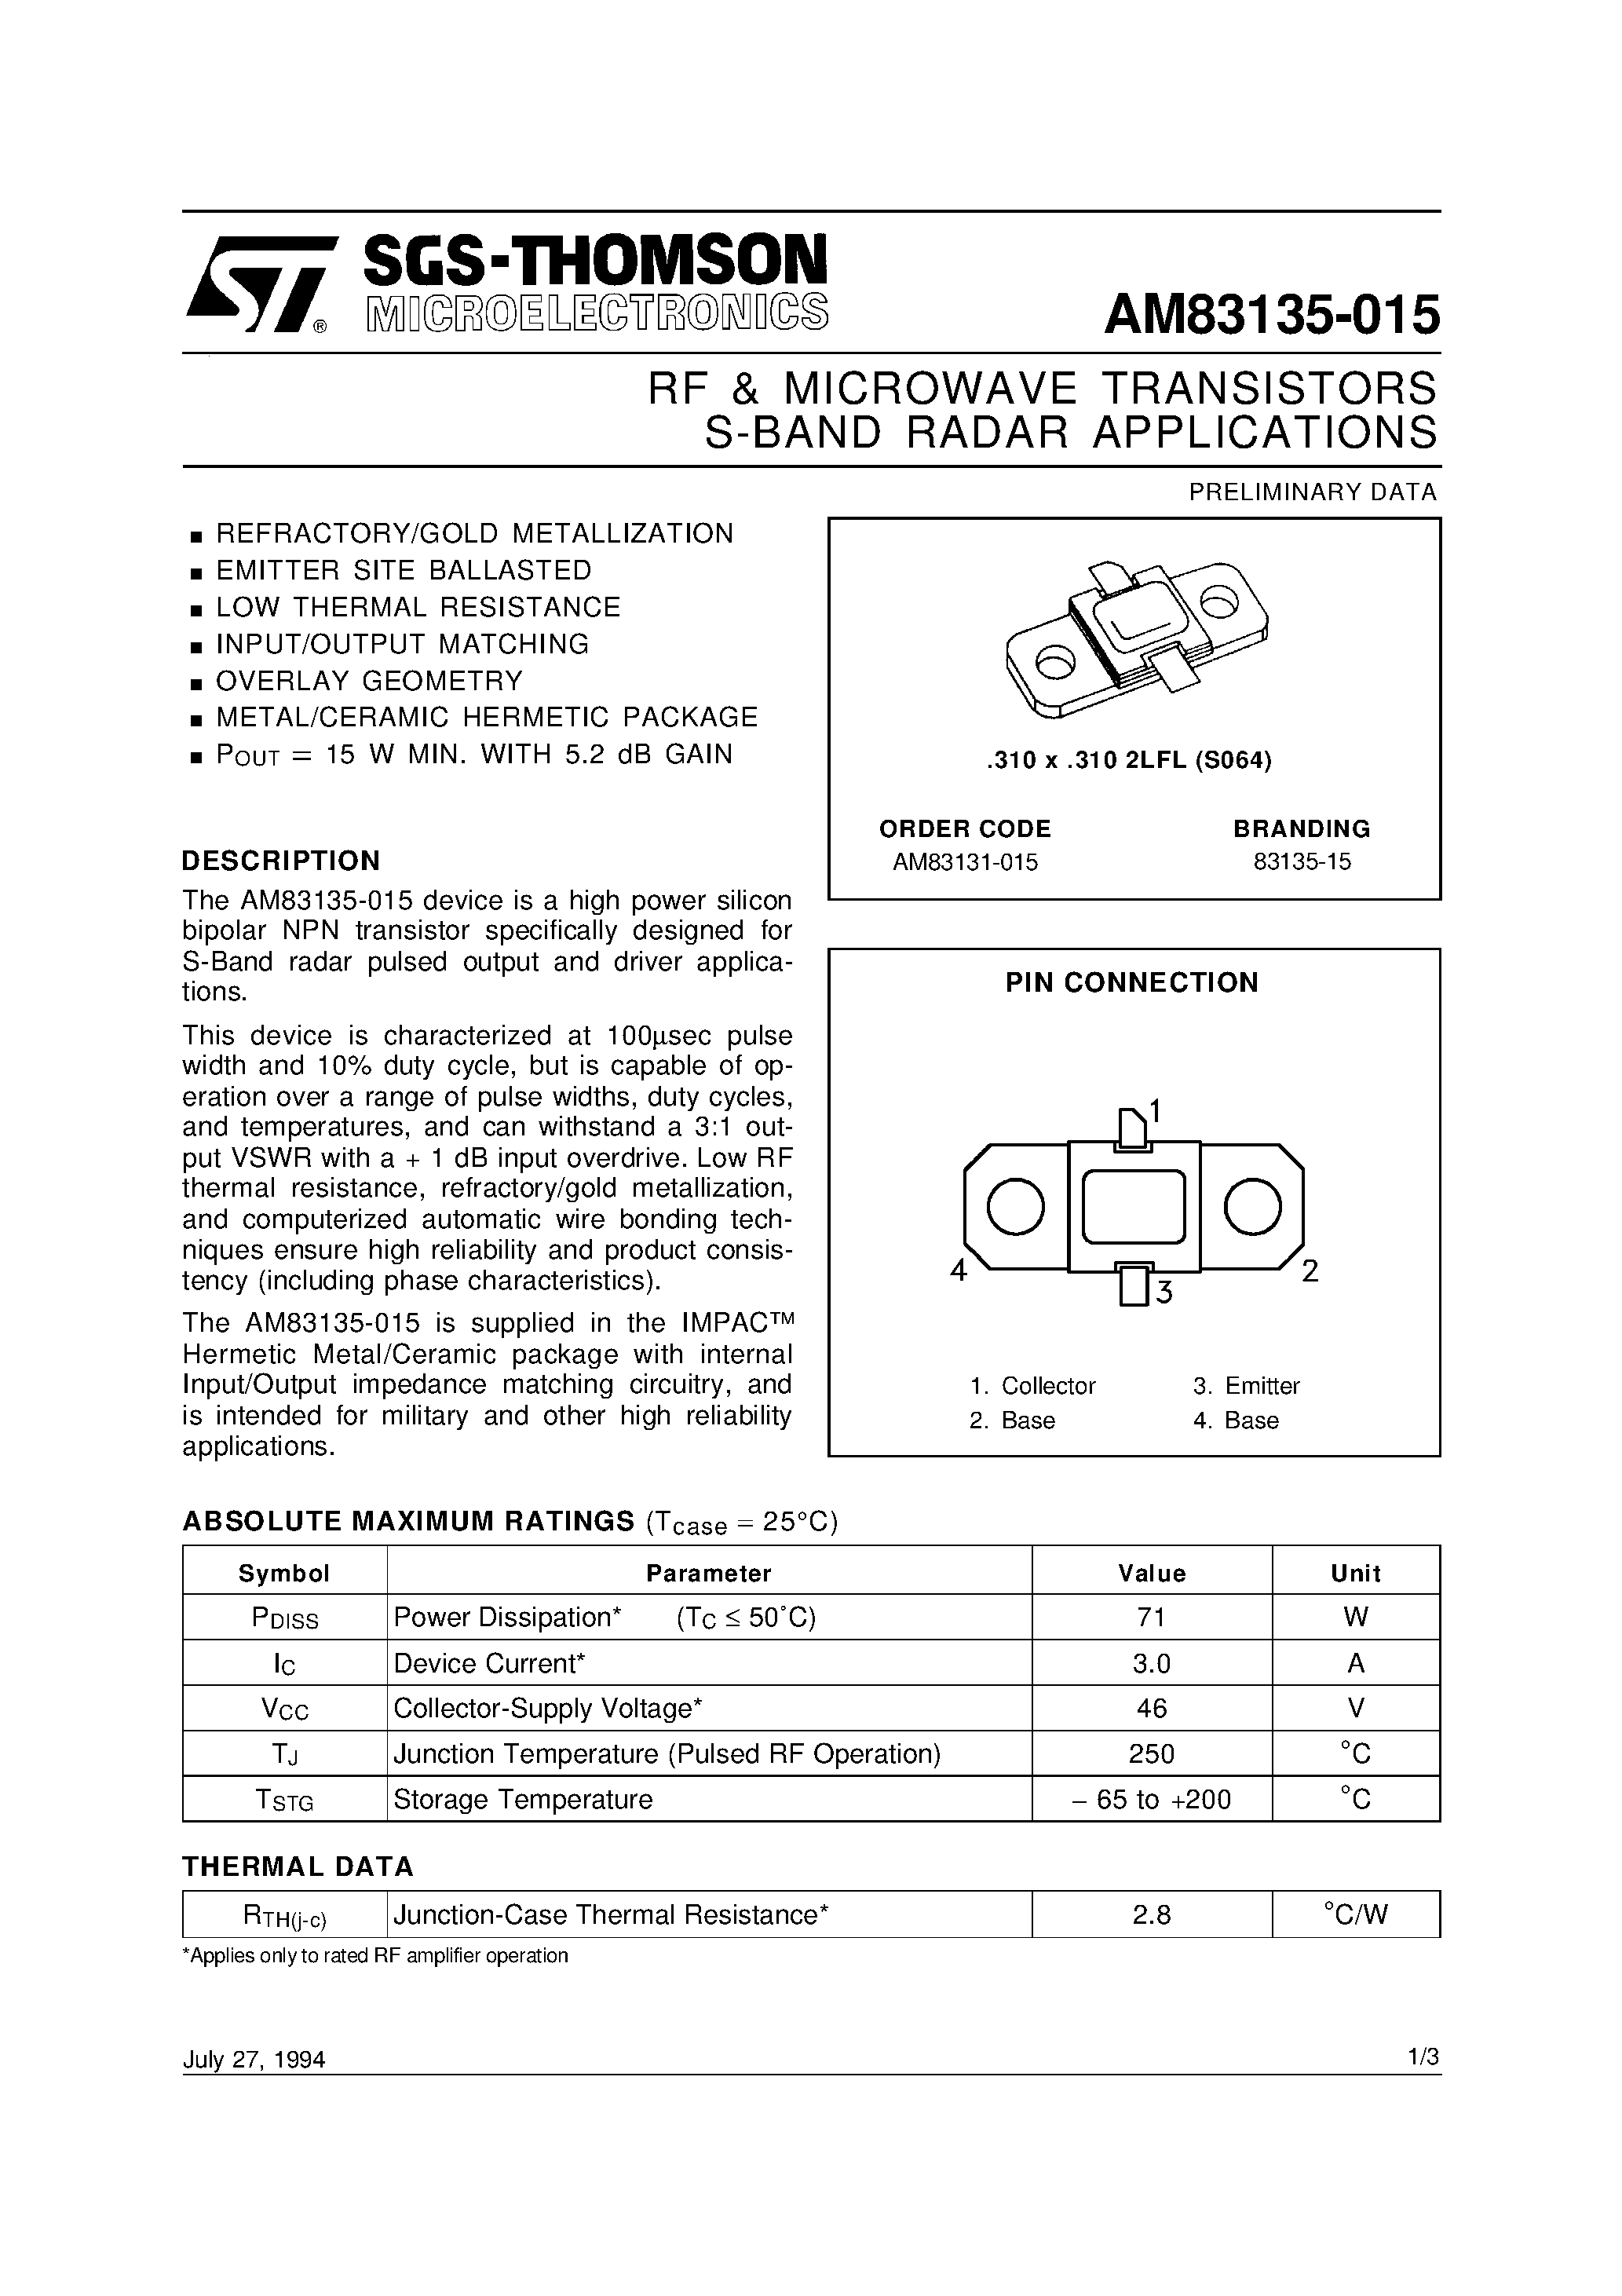 Datasheet AM83135-015 - RF & MICROWAVE TRANSISTORS S-BAND RADAR APPLICATIONS page 1